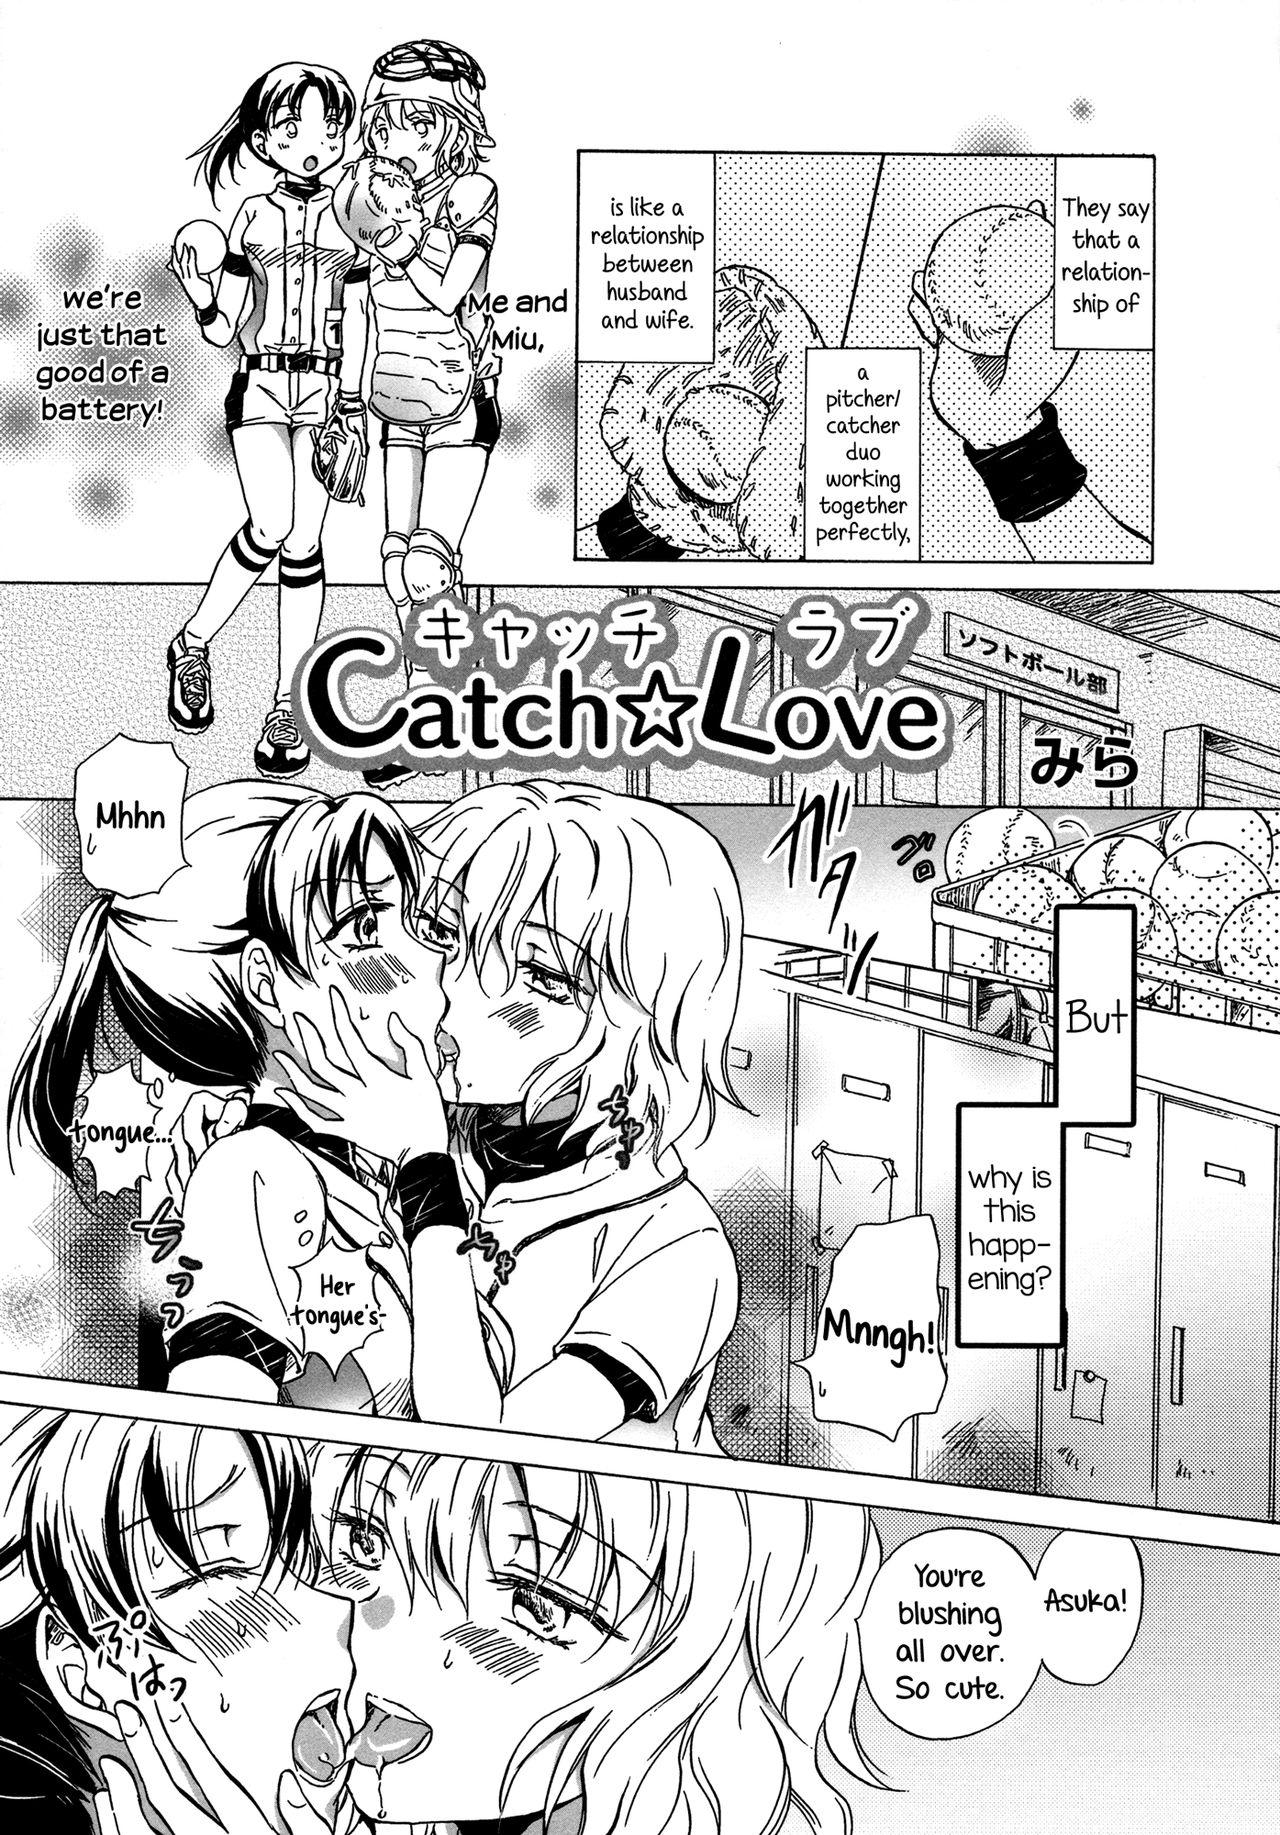 Catch Love 0